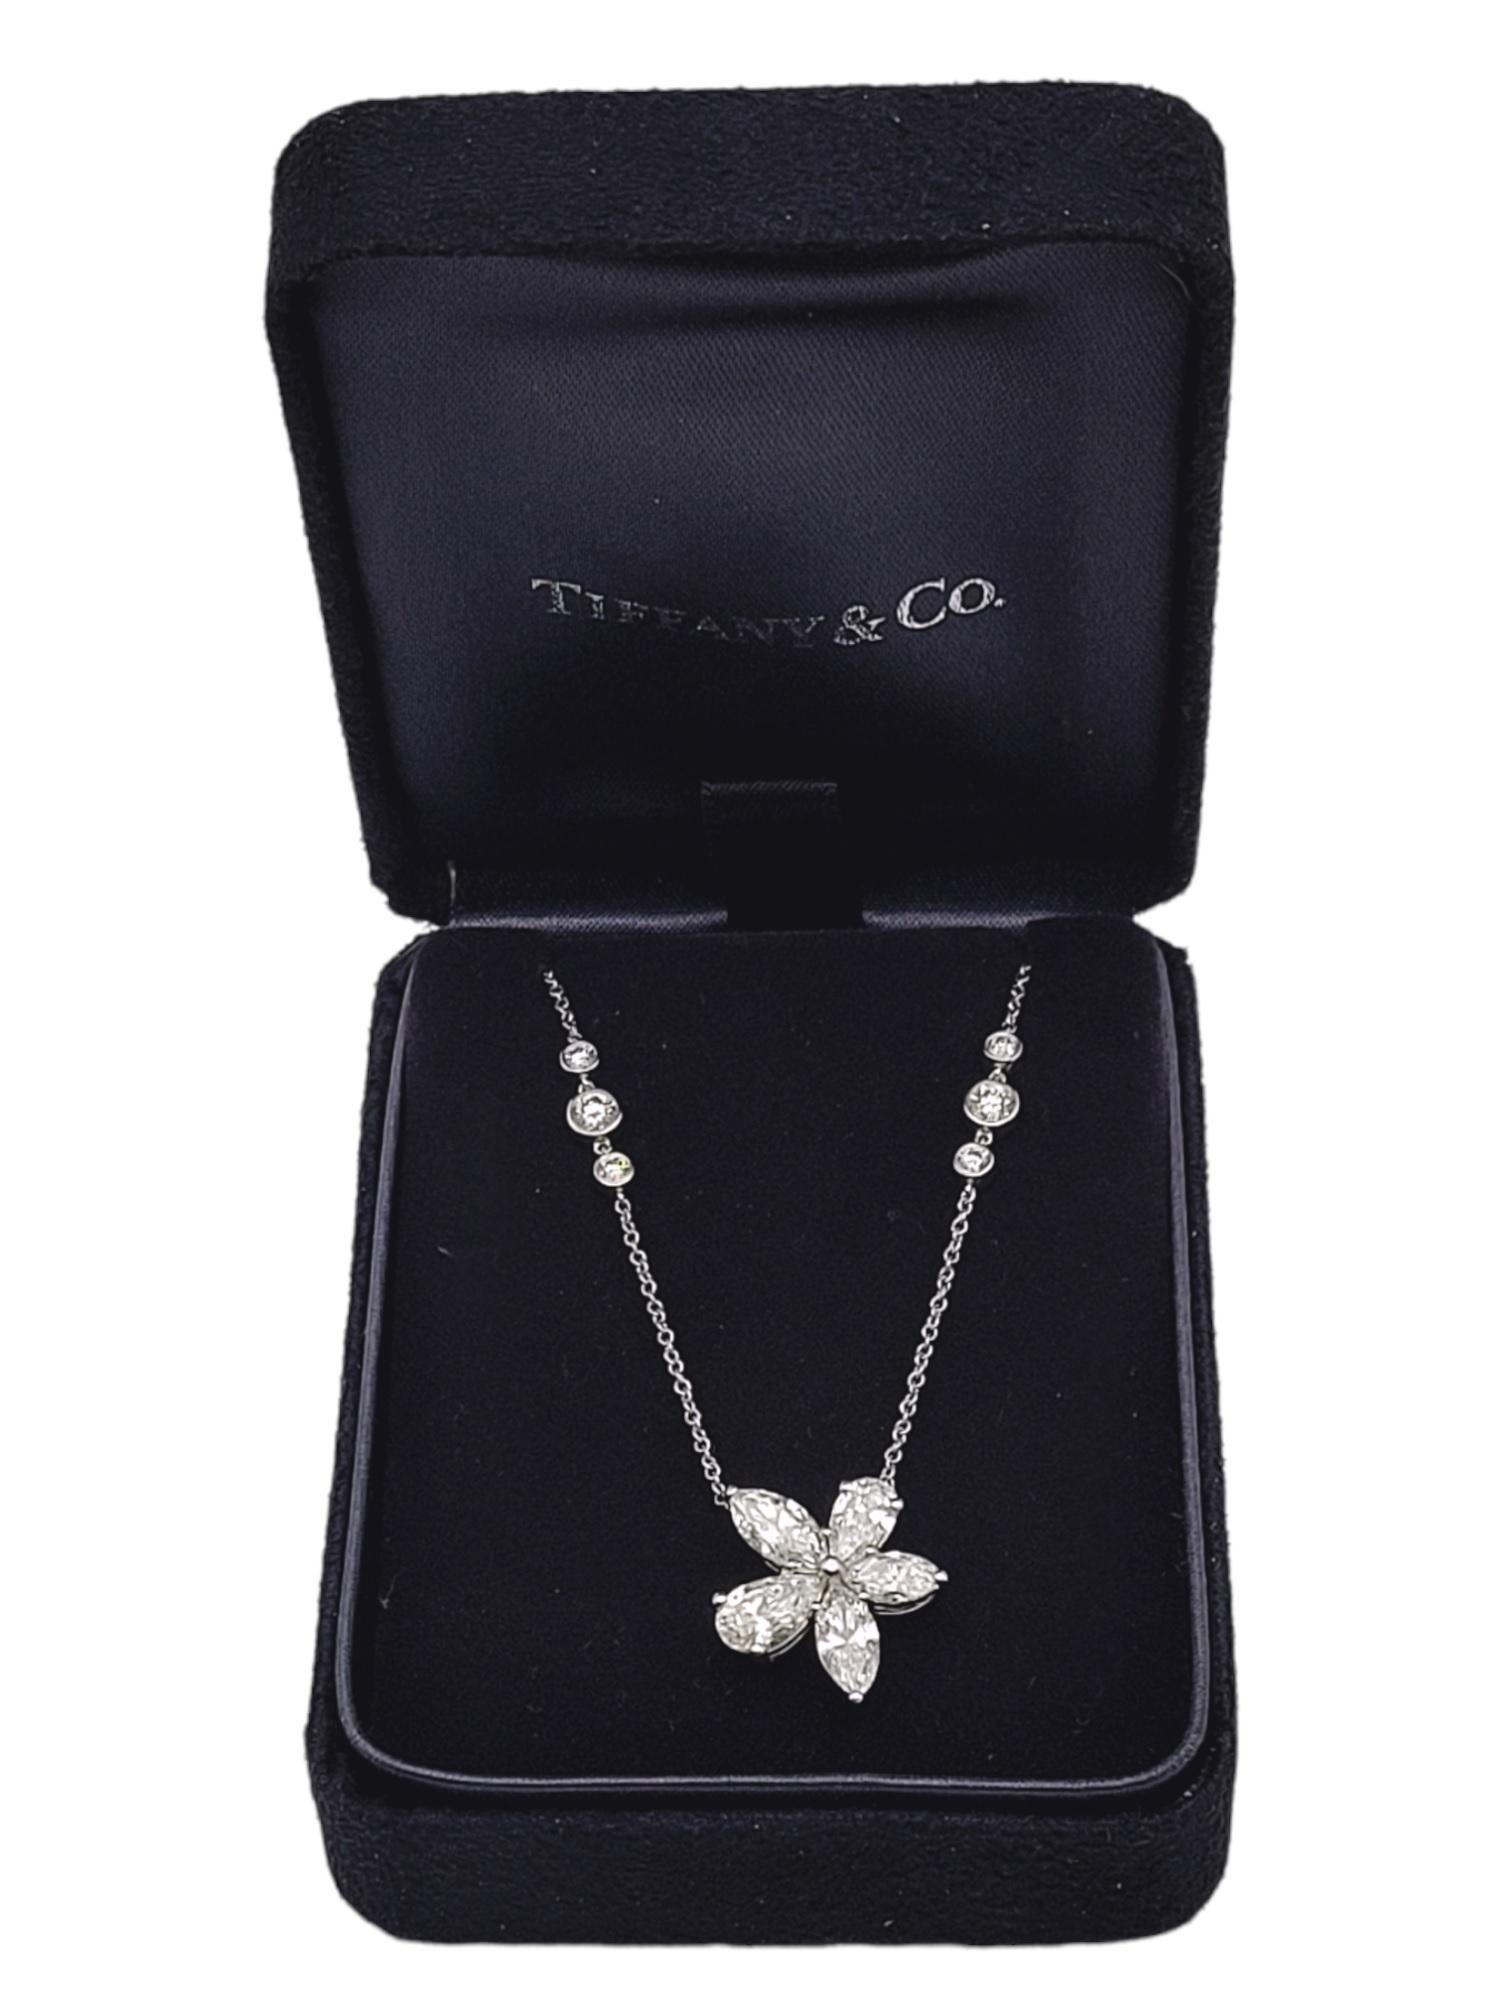 Tiffany & Co. Victoria Diamond Pendant Necklace in Platinum Extra Large, Station 6